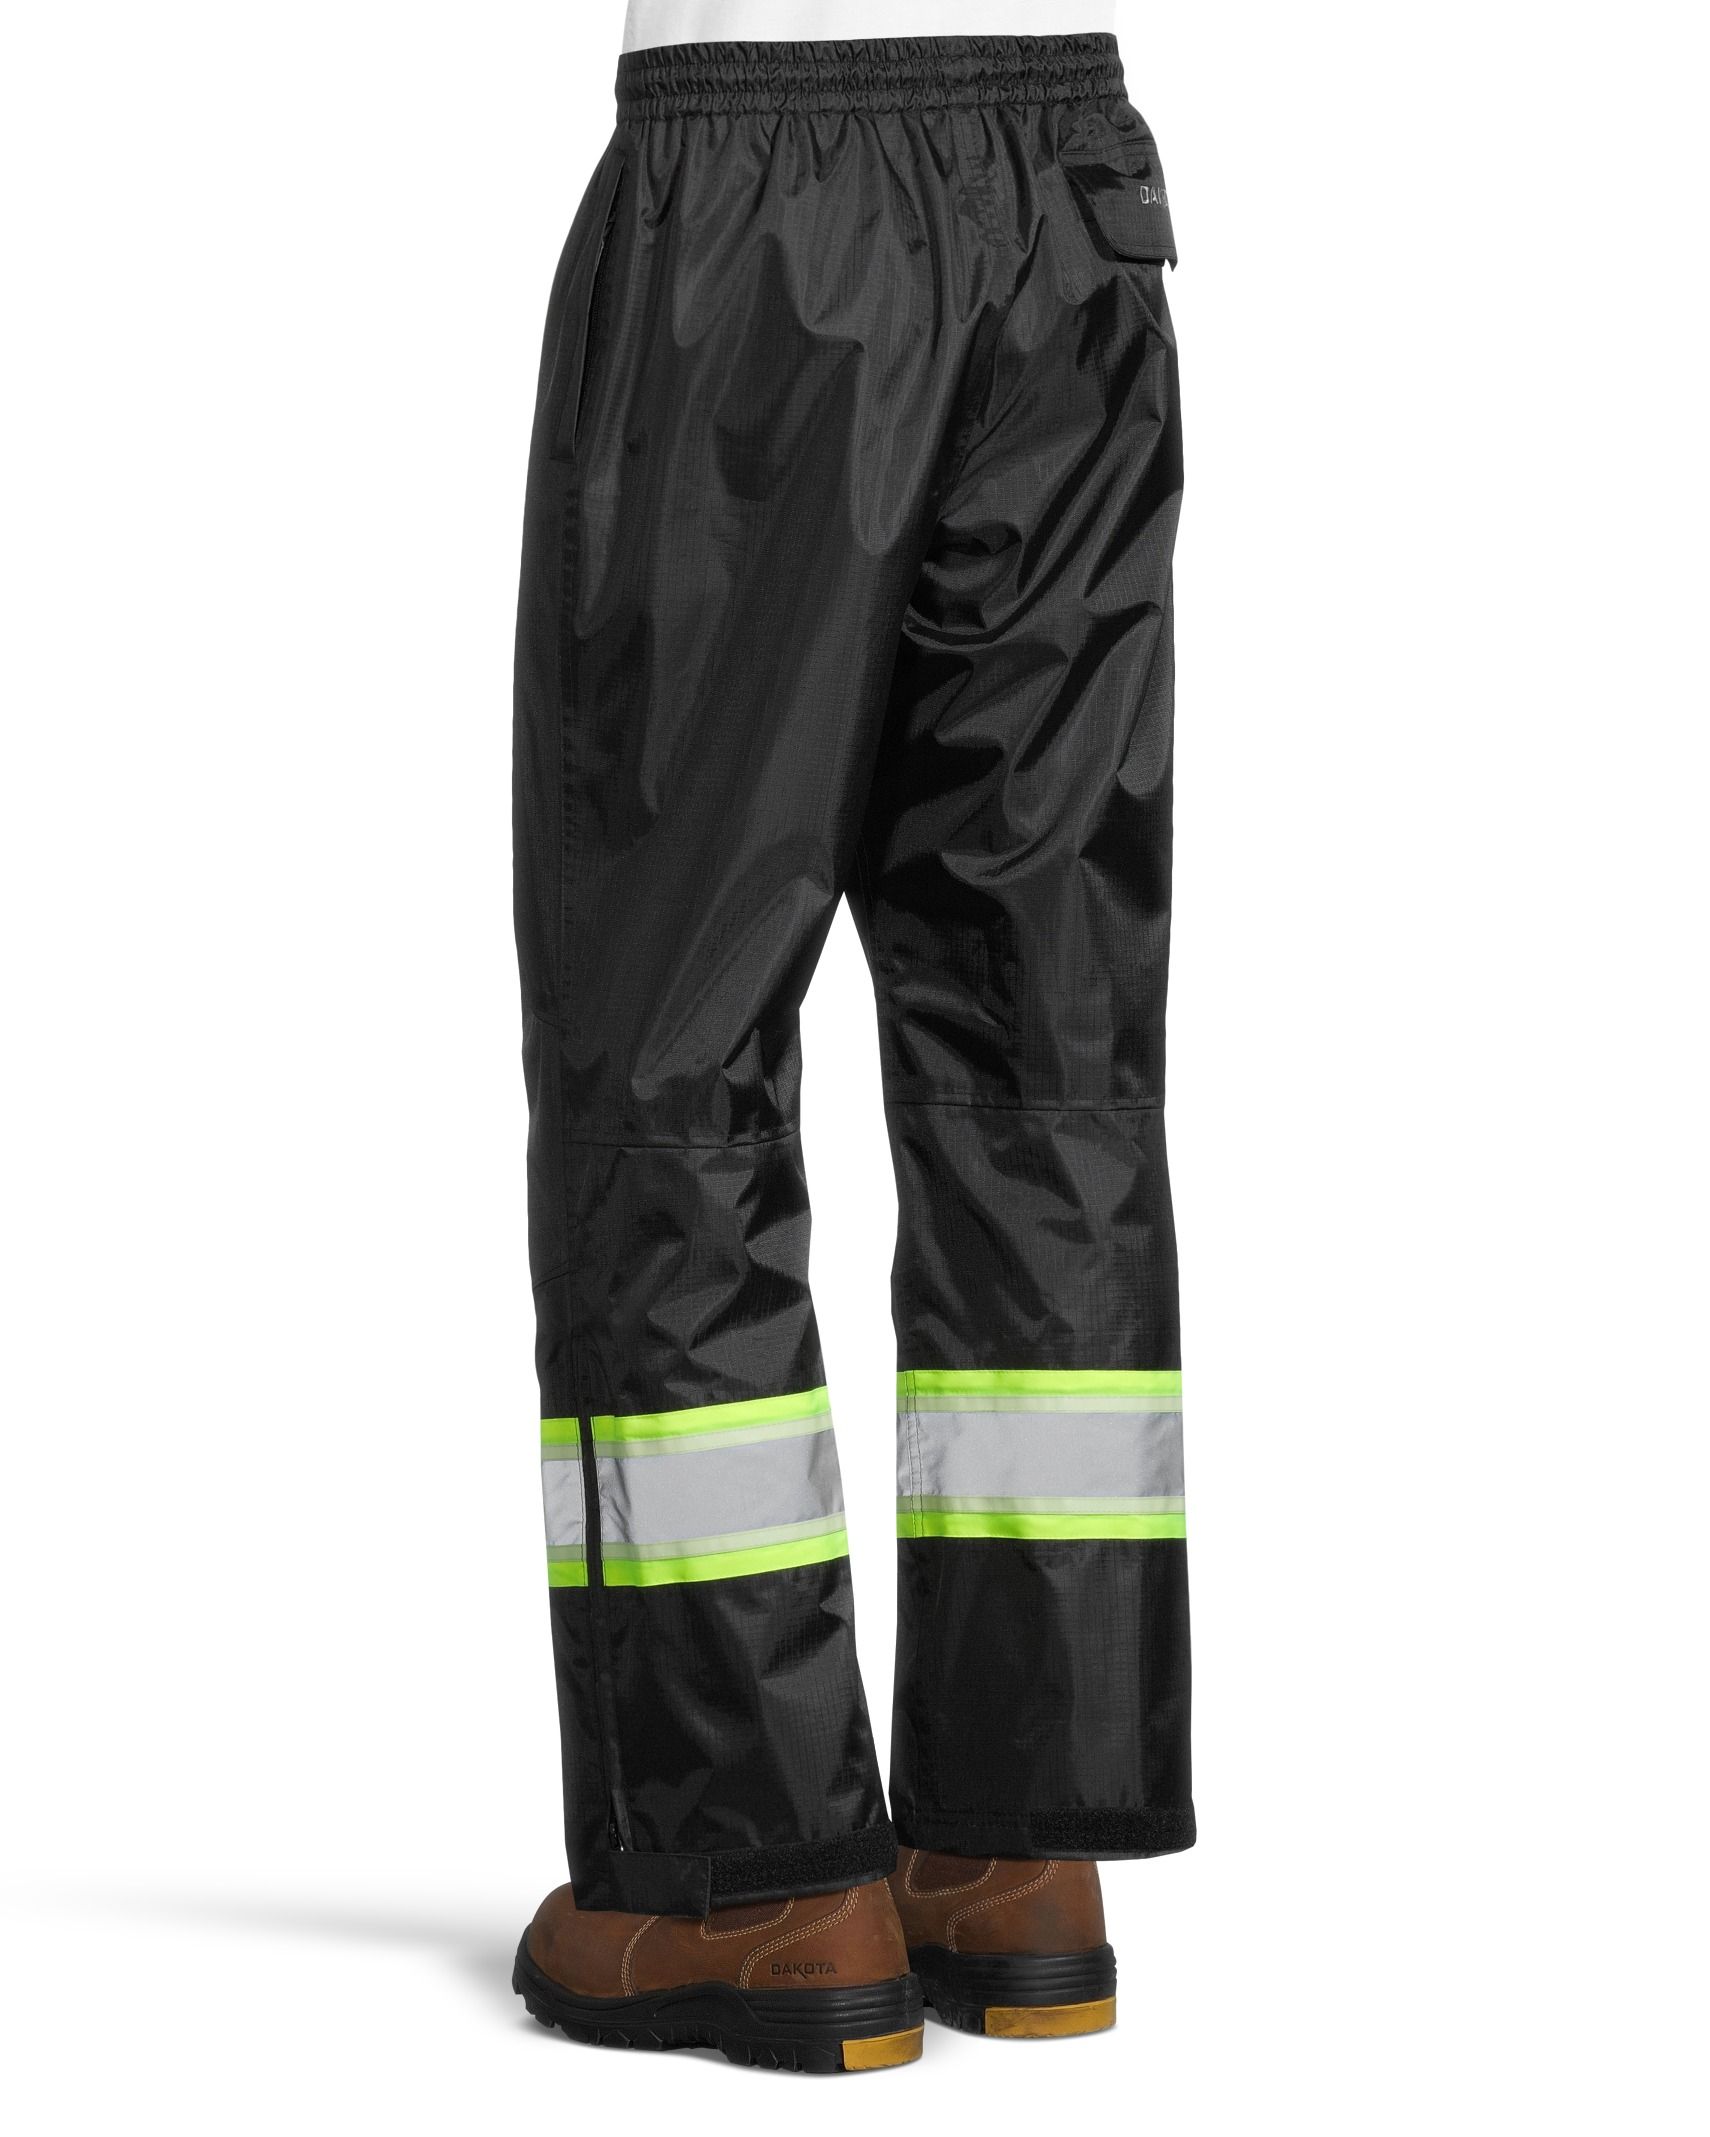 Dakota Workpro Series Men's Class 1 VizLite® Mesh Lined Work Pants